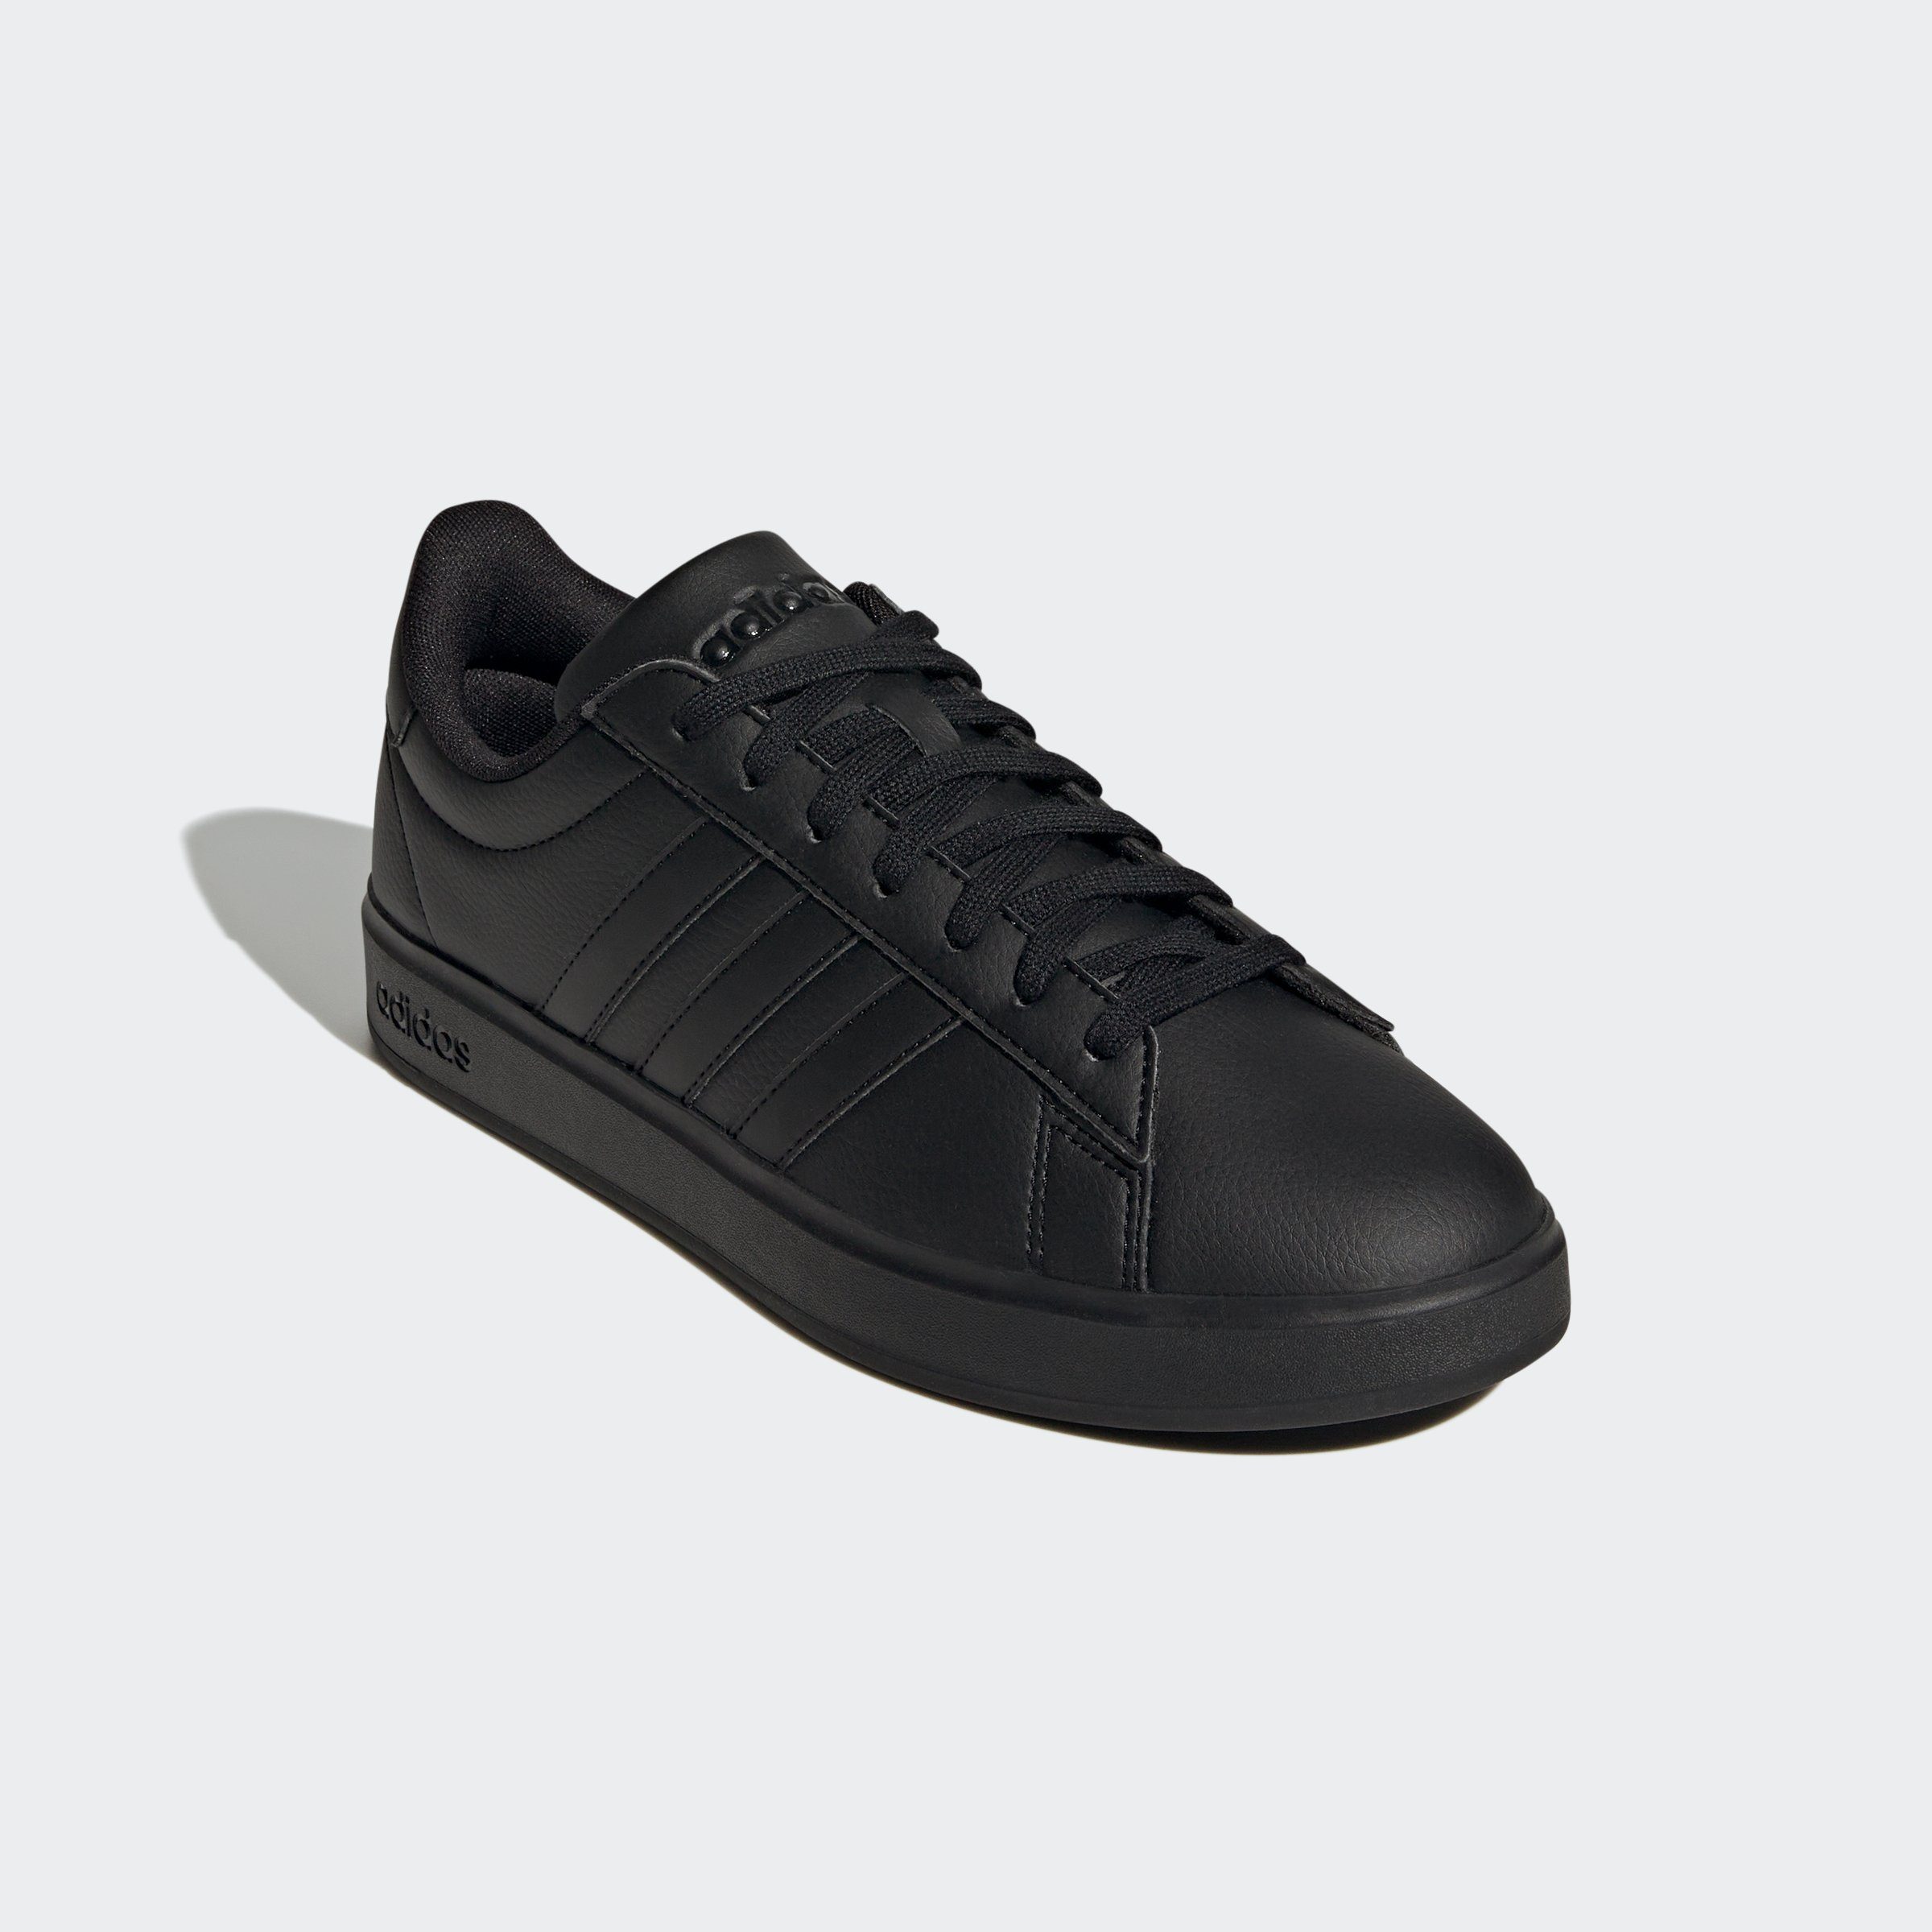 CLOUDFOAM Black White Core des Sportswear auf Sneaker GRAND Core / / Superstar adidas den COURT COMFORT Cloud adidas Black Design Spuren